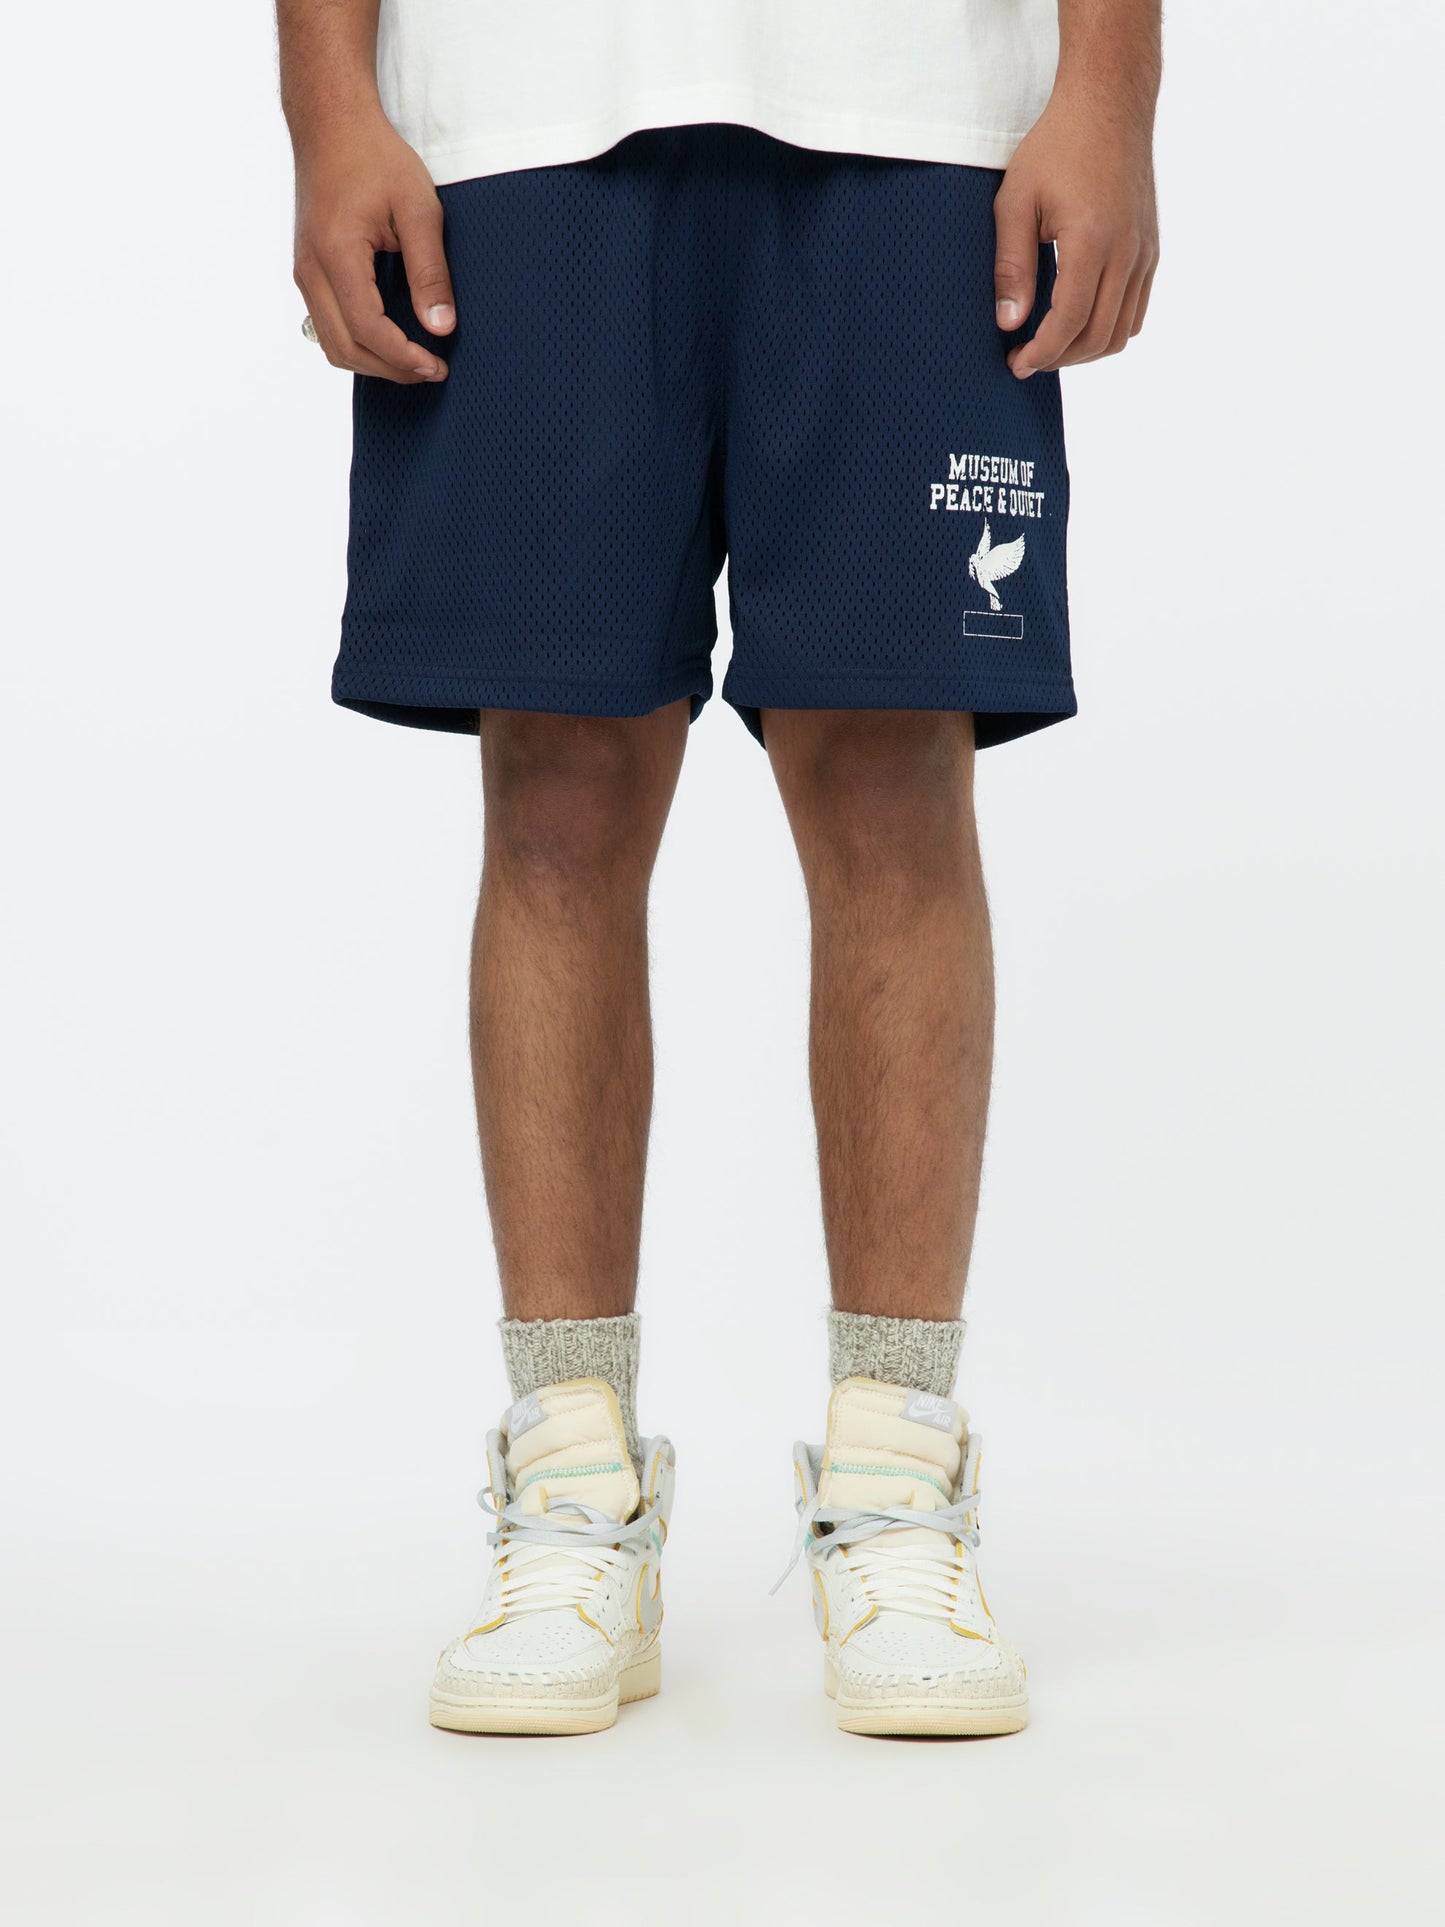 P.E. Mesh Shorts (Navy)